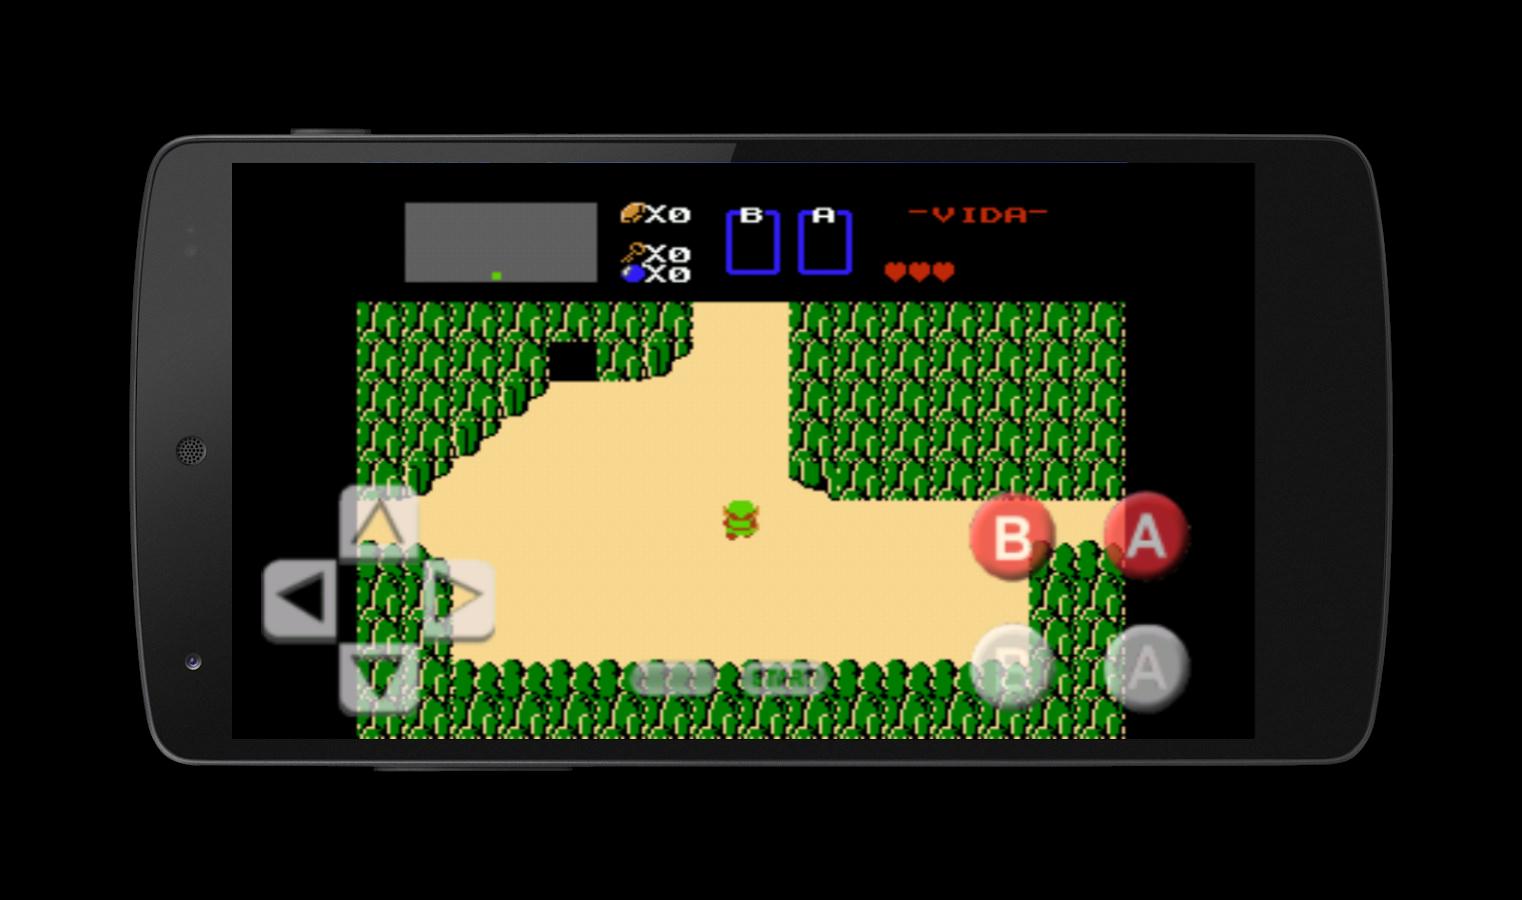 Zelda эмулятор. The Legend эмулятор. Эмулятор Зельда на андроид. Yuzu Emulator на андроид. Эмулятор юзу на андроид